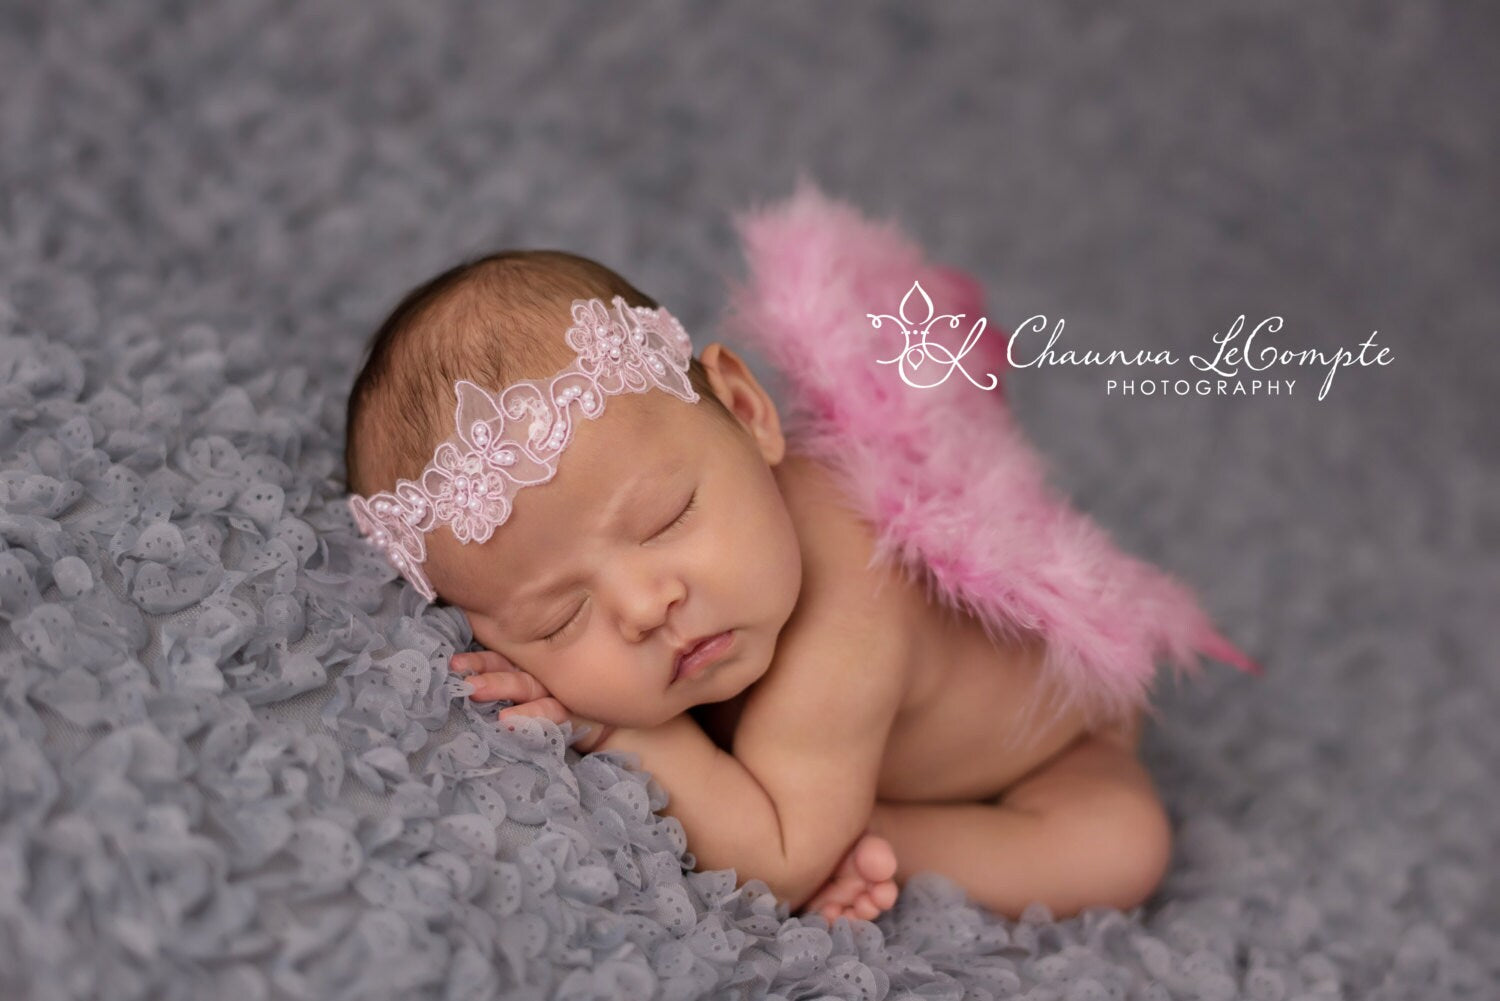 Mauve Baby Wing Set / Baby Angel Wing Set / Beaded Lace Headband / Angel Wings / Newborn Photo Prop / Newborn Wing / Newborn Angel Costume